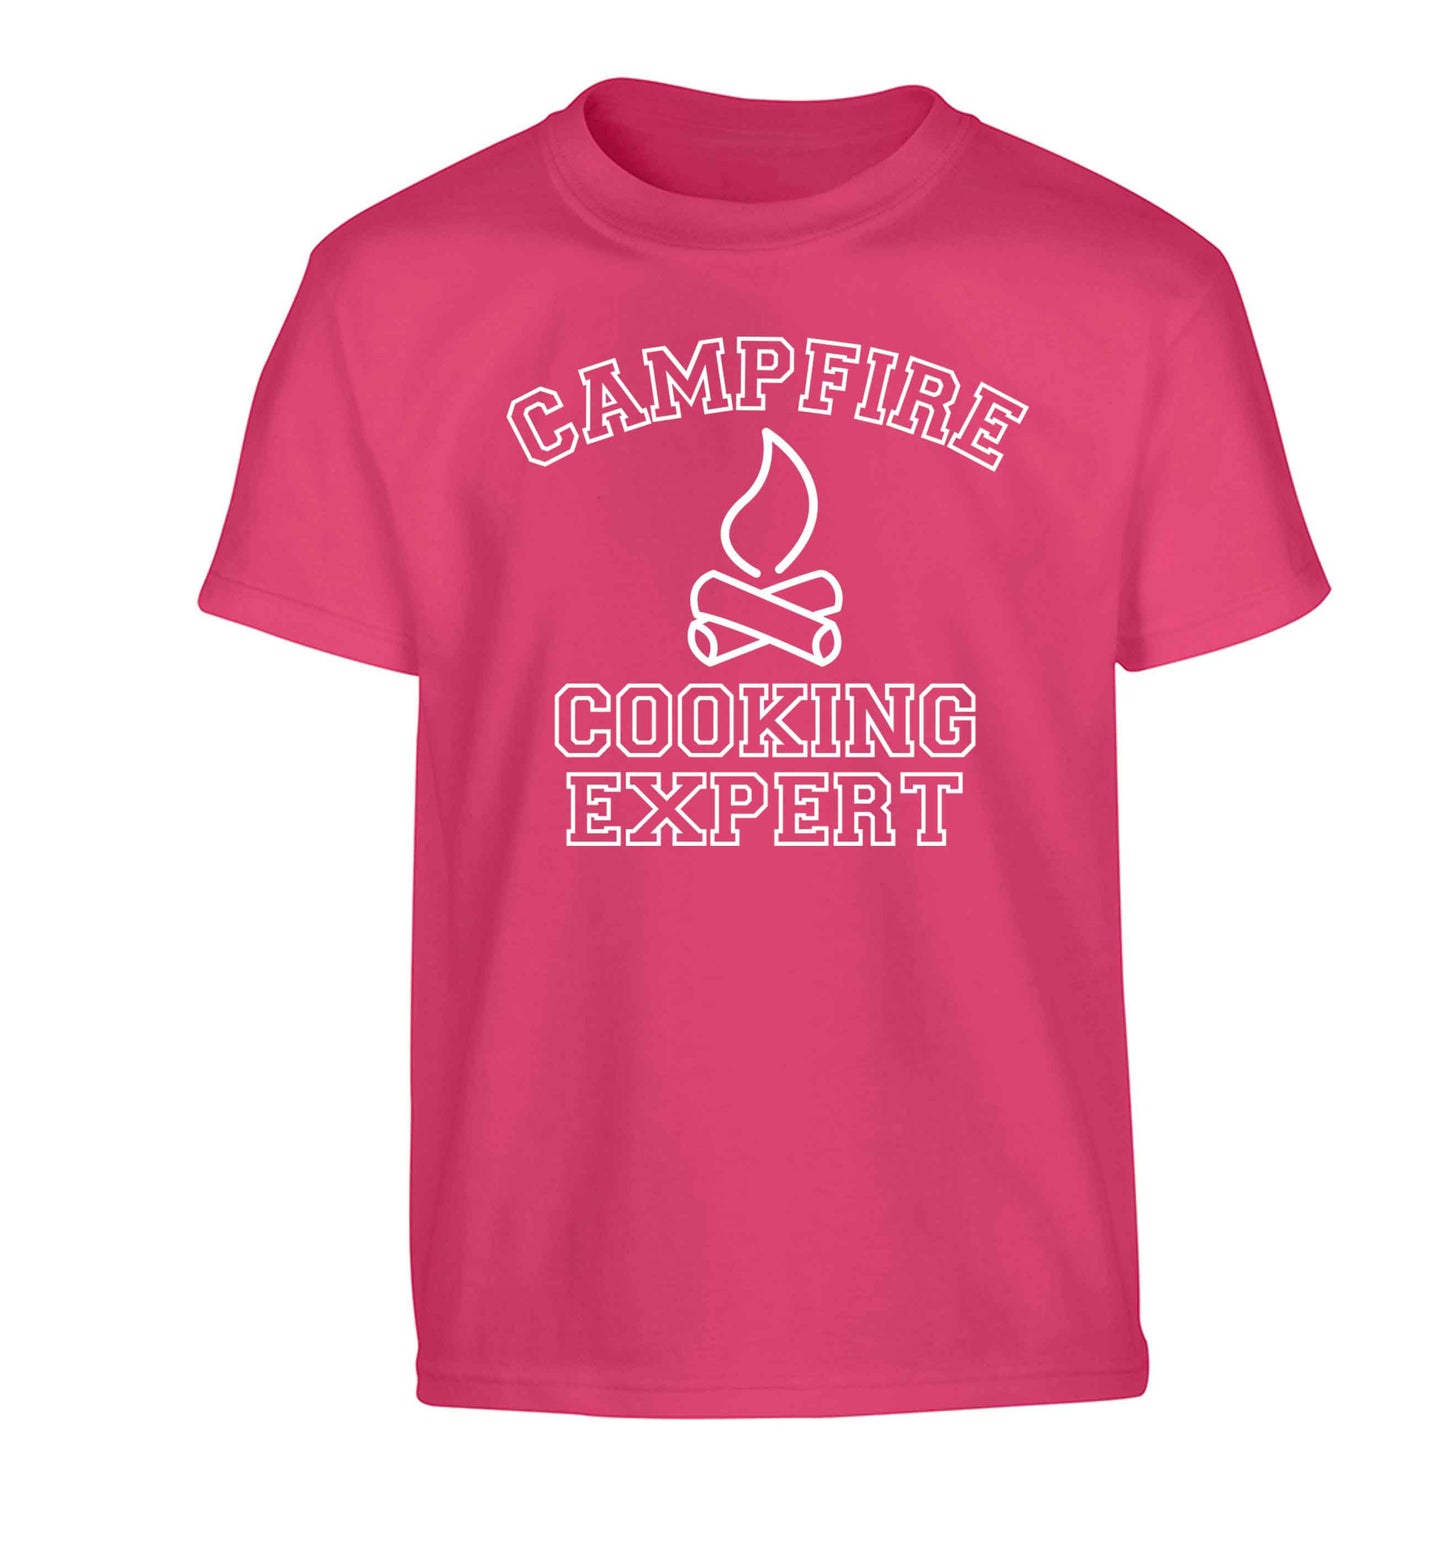 Campfire cooking expert Children's pink Tshirt 12-13 Years